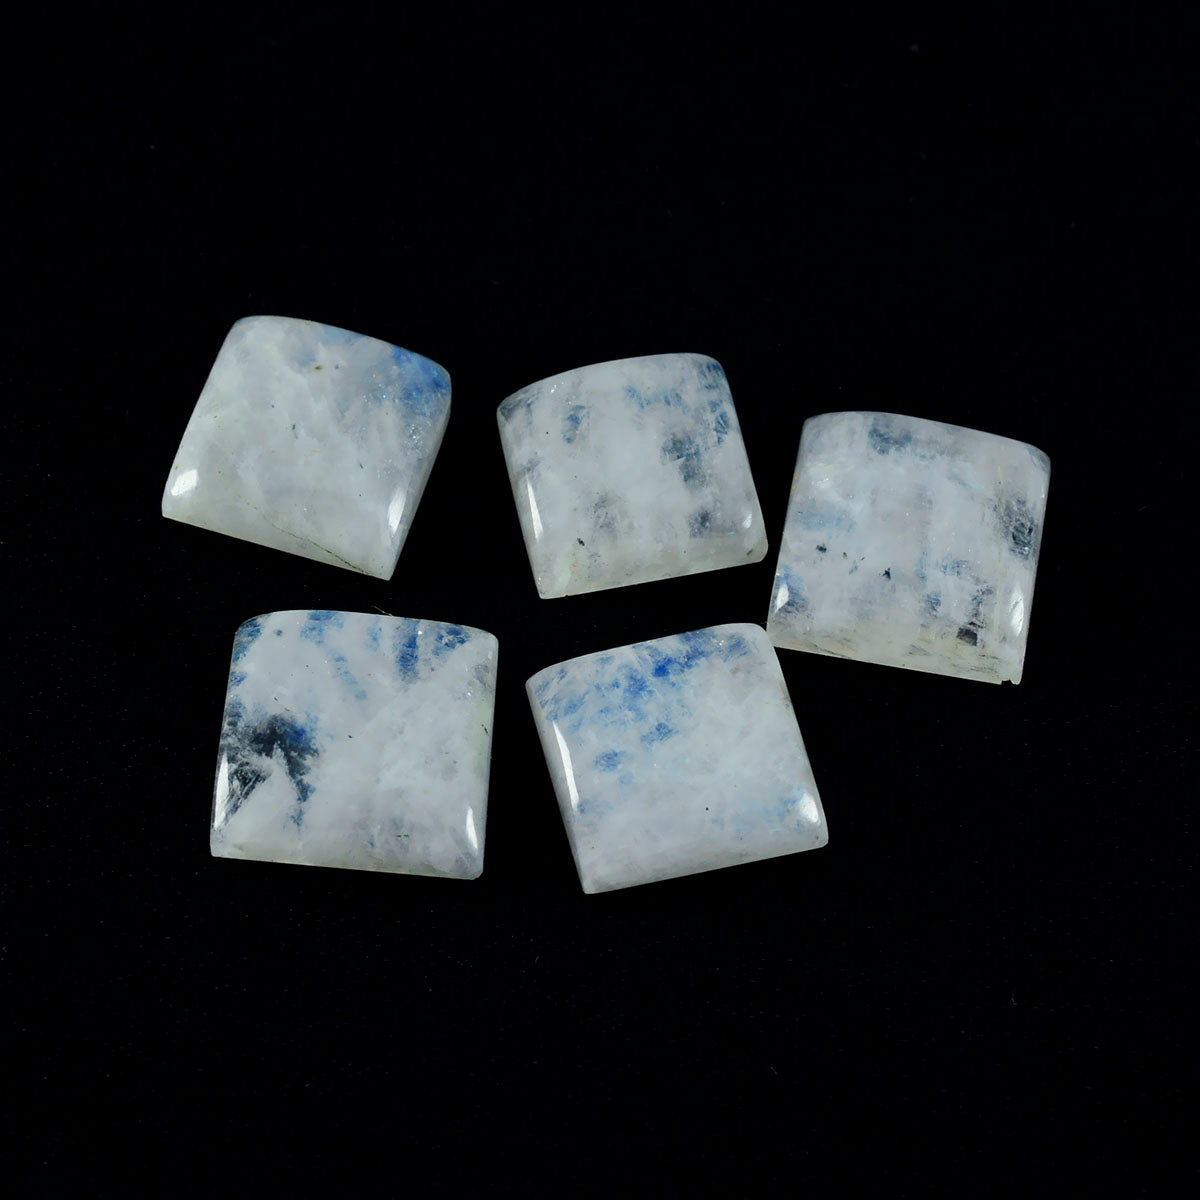 Riyogems 1PC White Rainbow Moonstone Cabochon 14x14 mm Square Shape sweet Quality Loose Gems